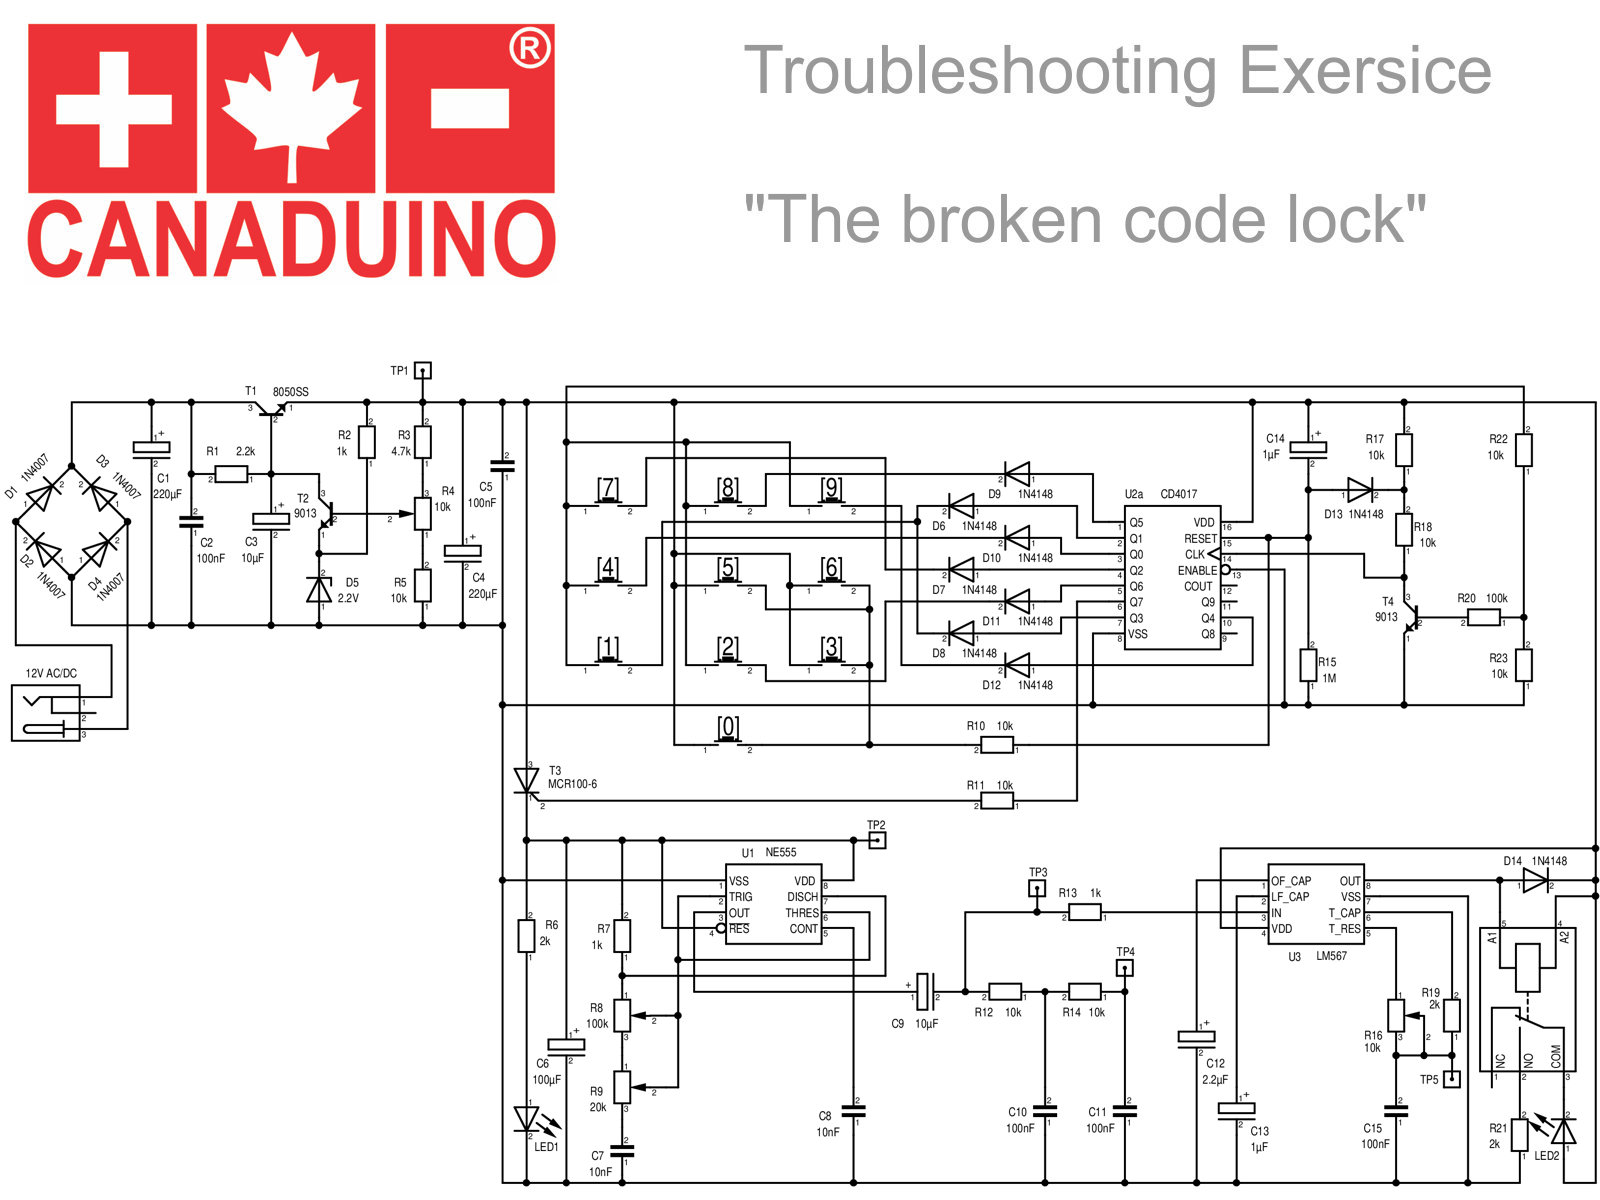 26860 code lock troubleshooting education diy kit 5